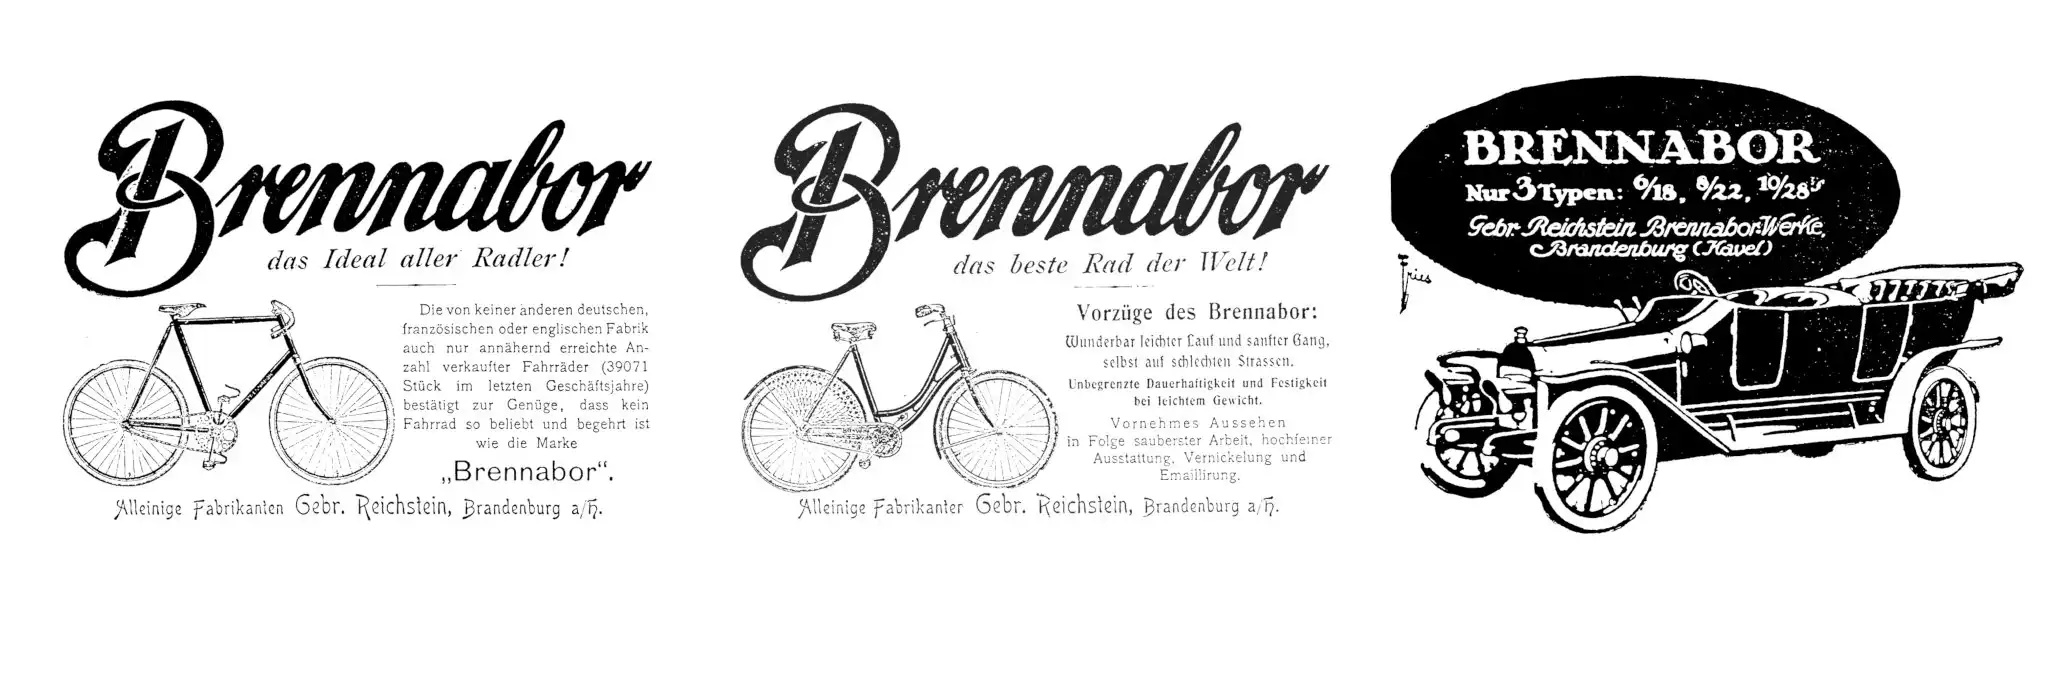 1194-brennabor-brandenburg-489.490.webp